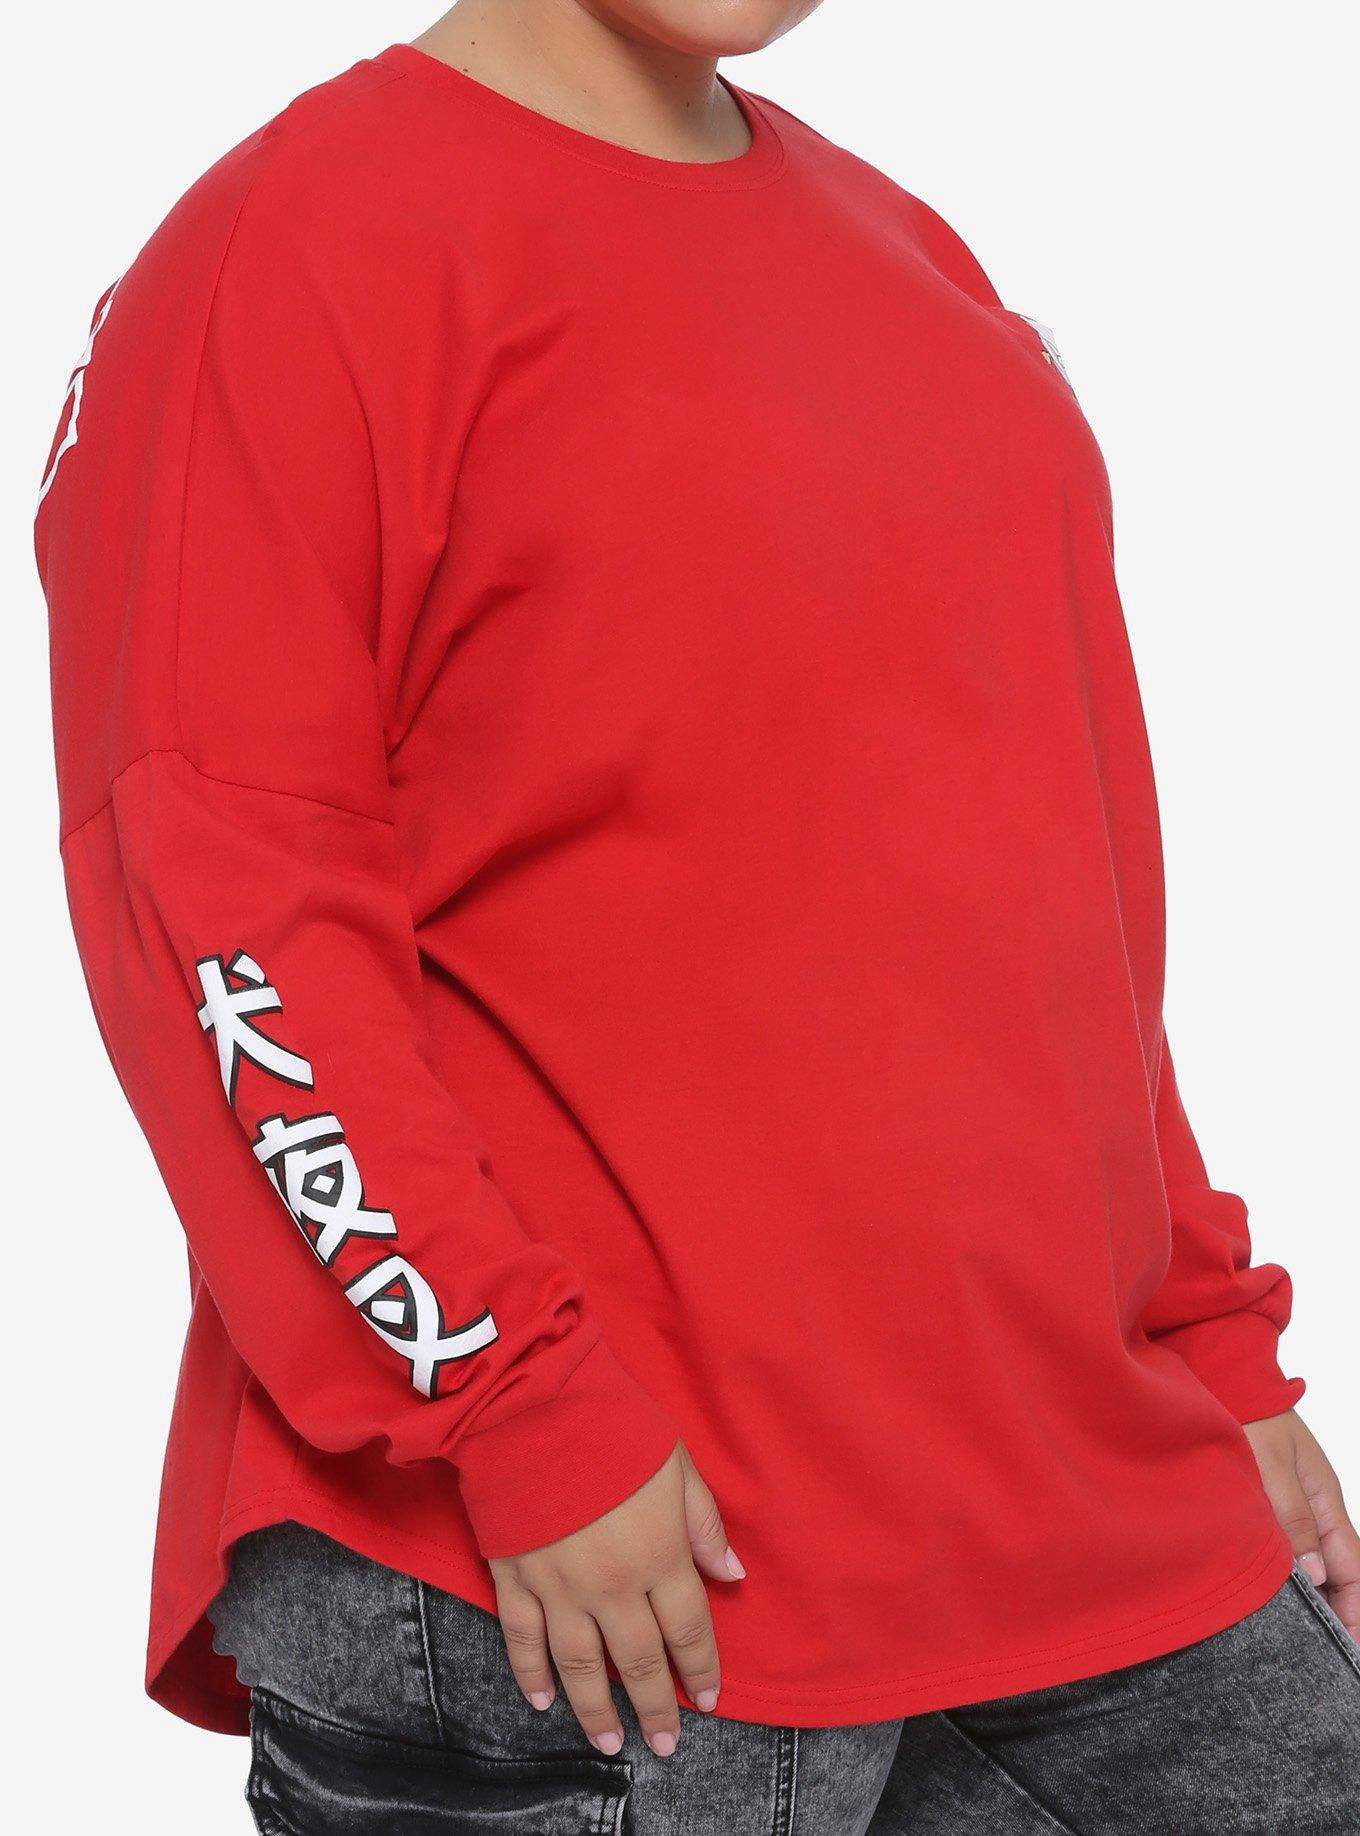 Inuyasha Sit Boy Girls Athletic Jersey Plus Size, RED, alternate